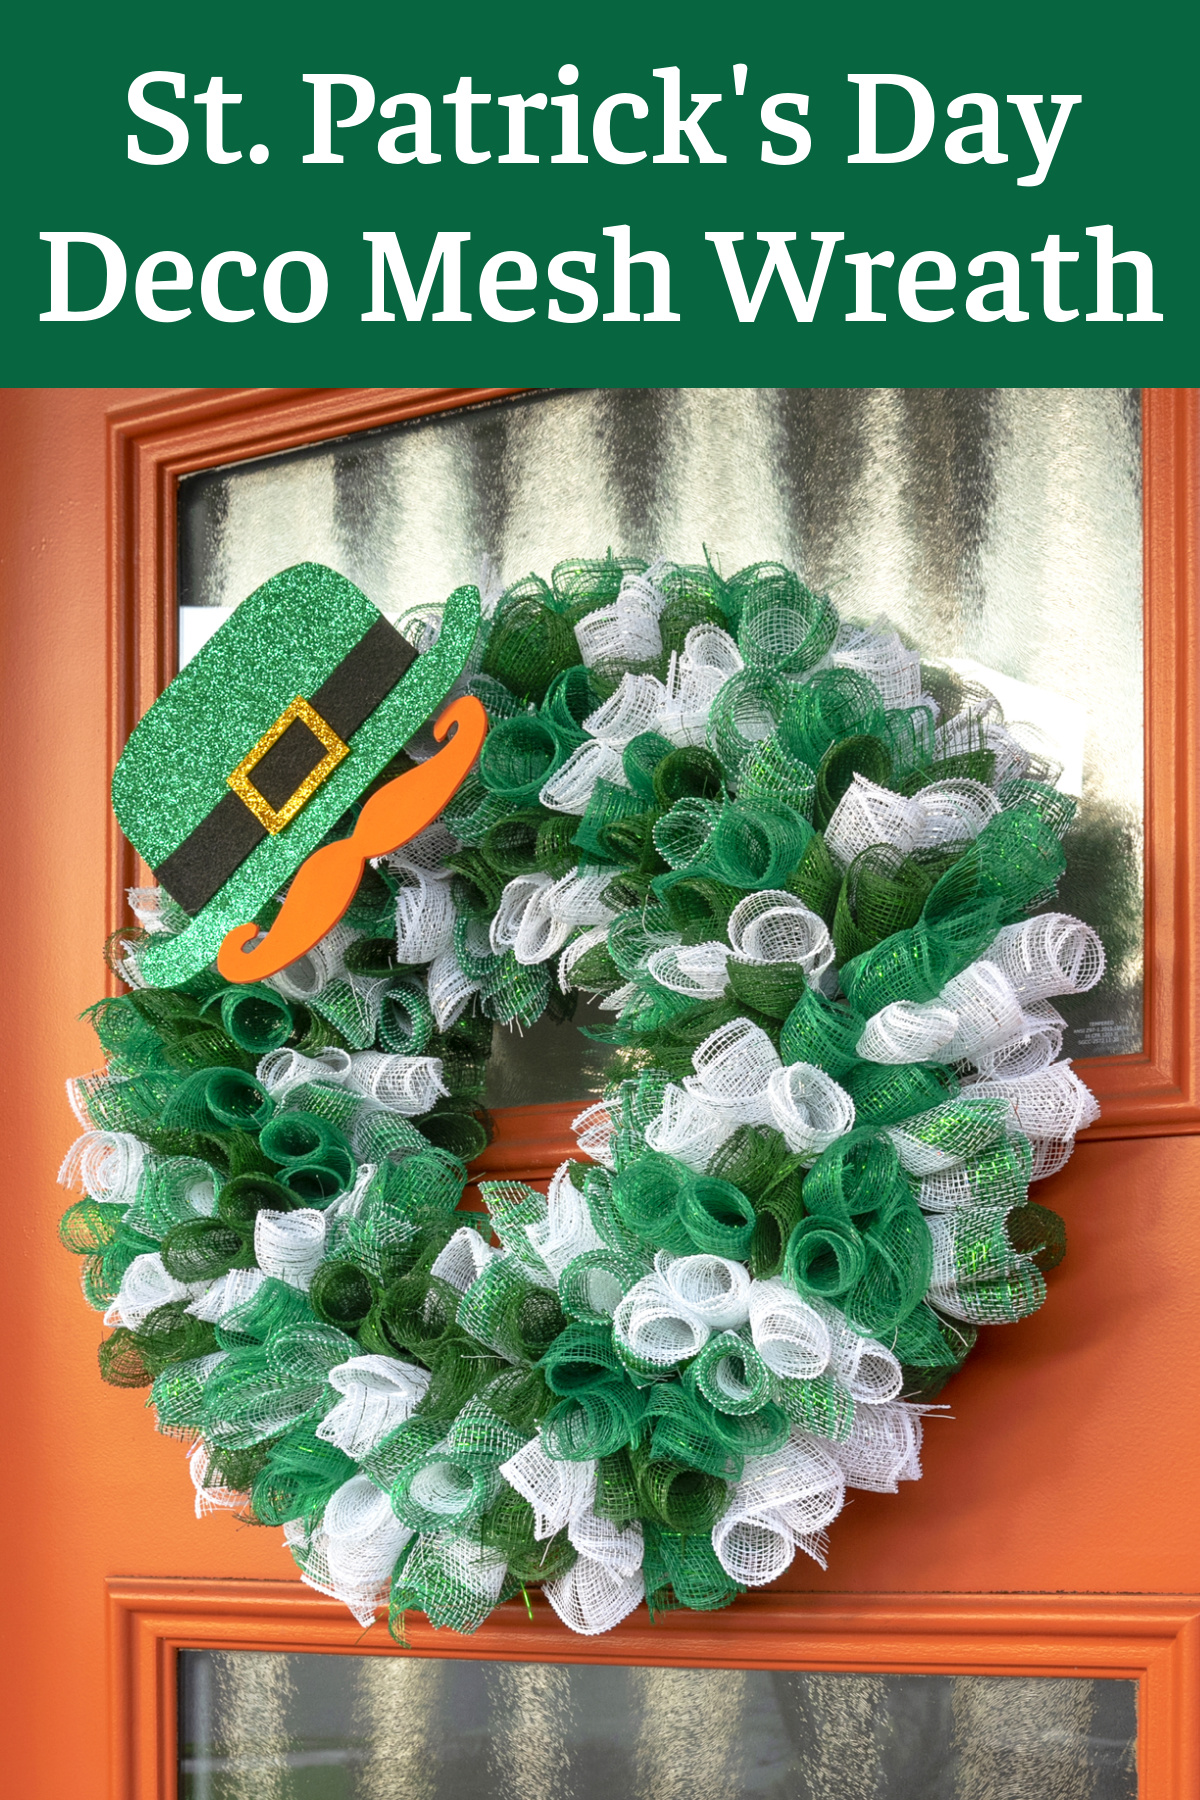 Make a St. Patrick's Day Deco Mesh Wreath